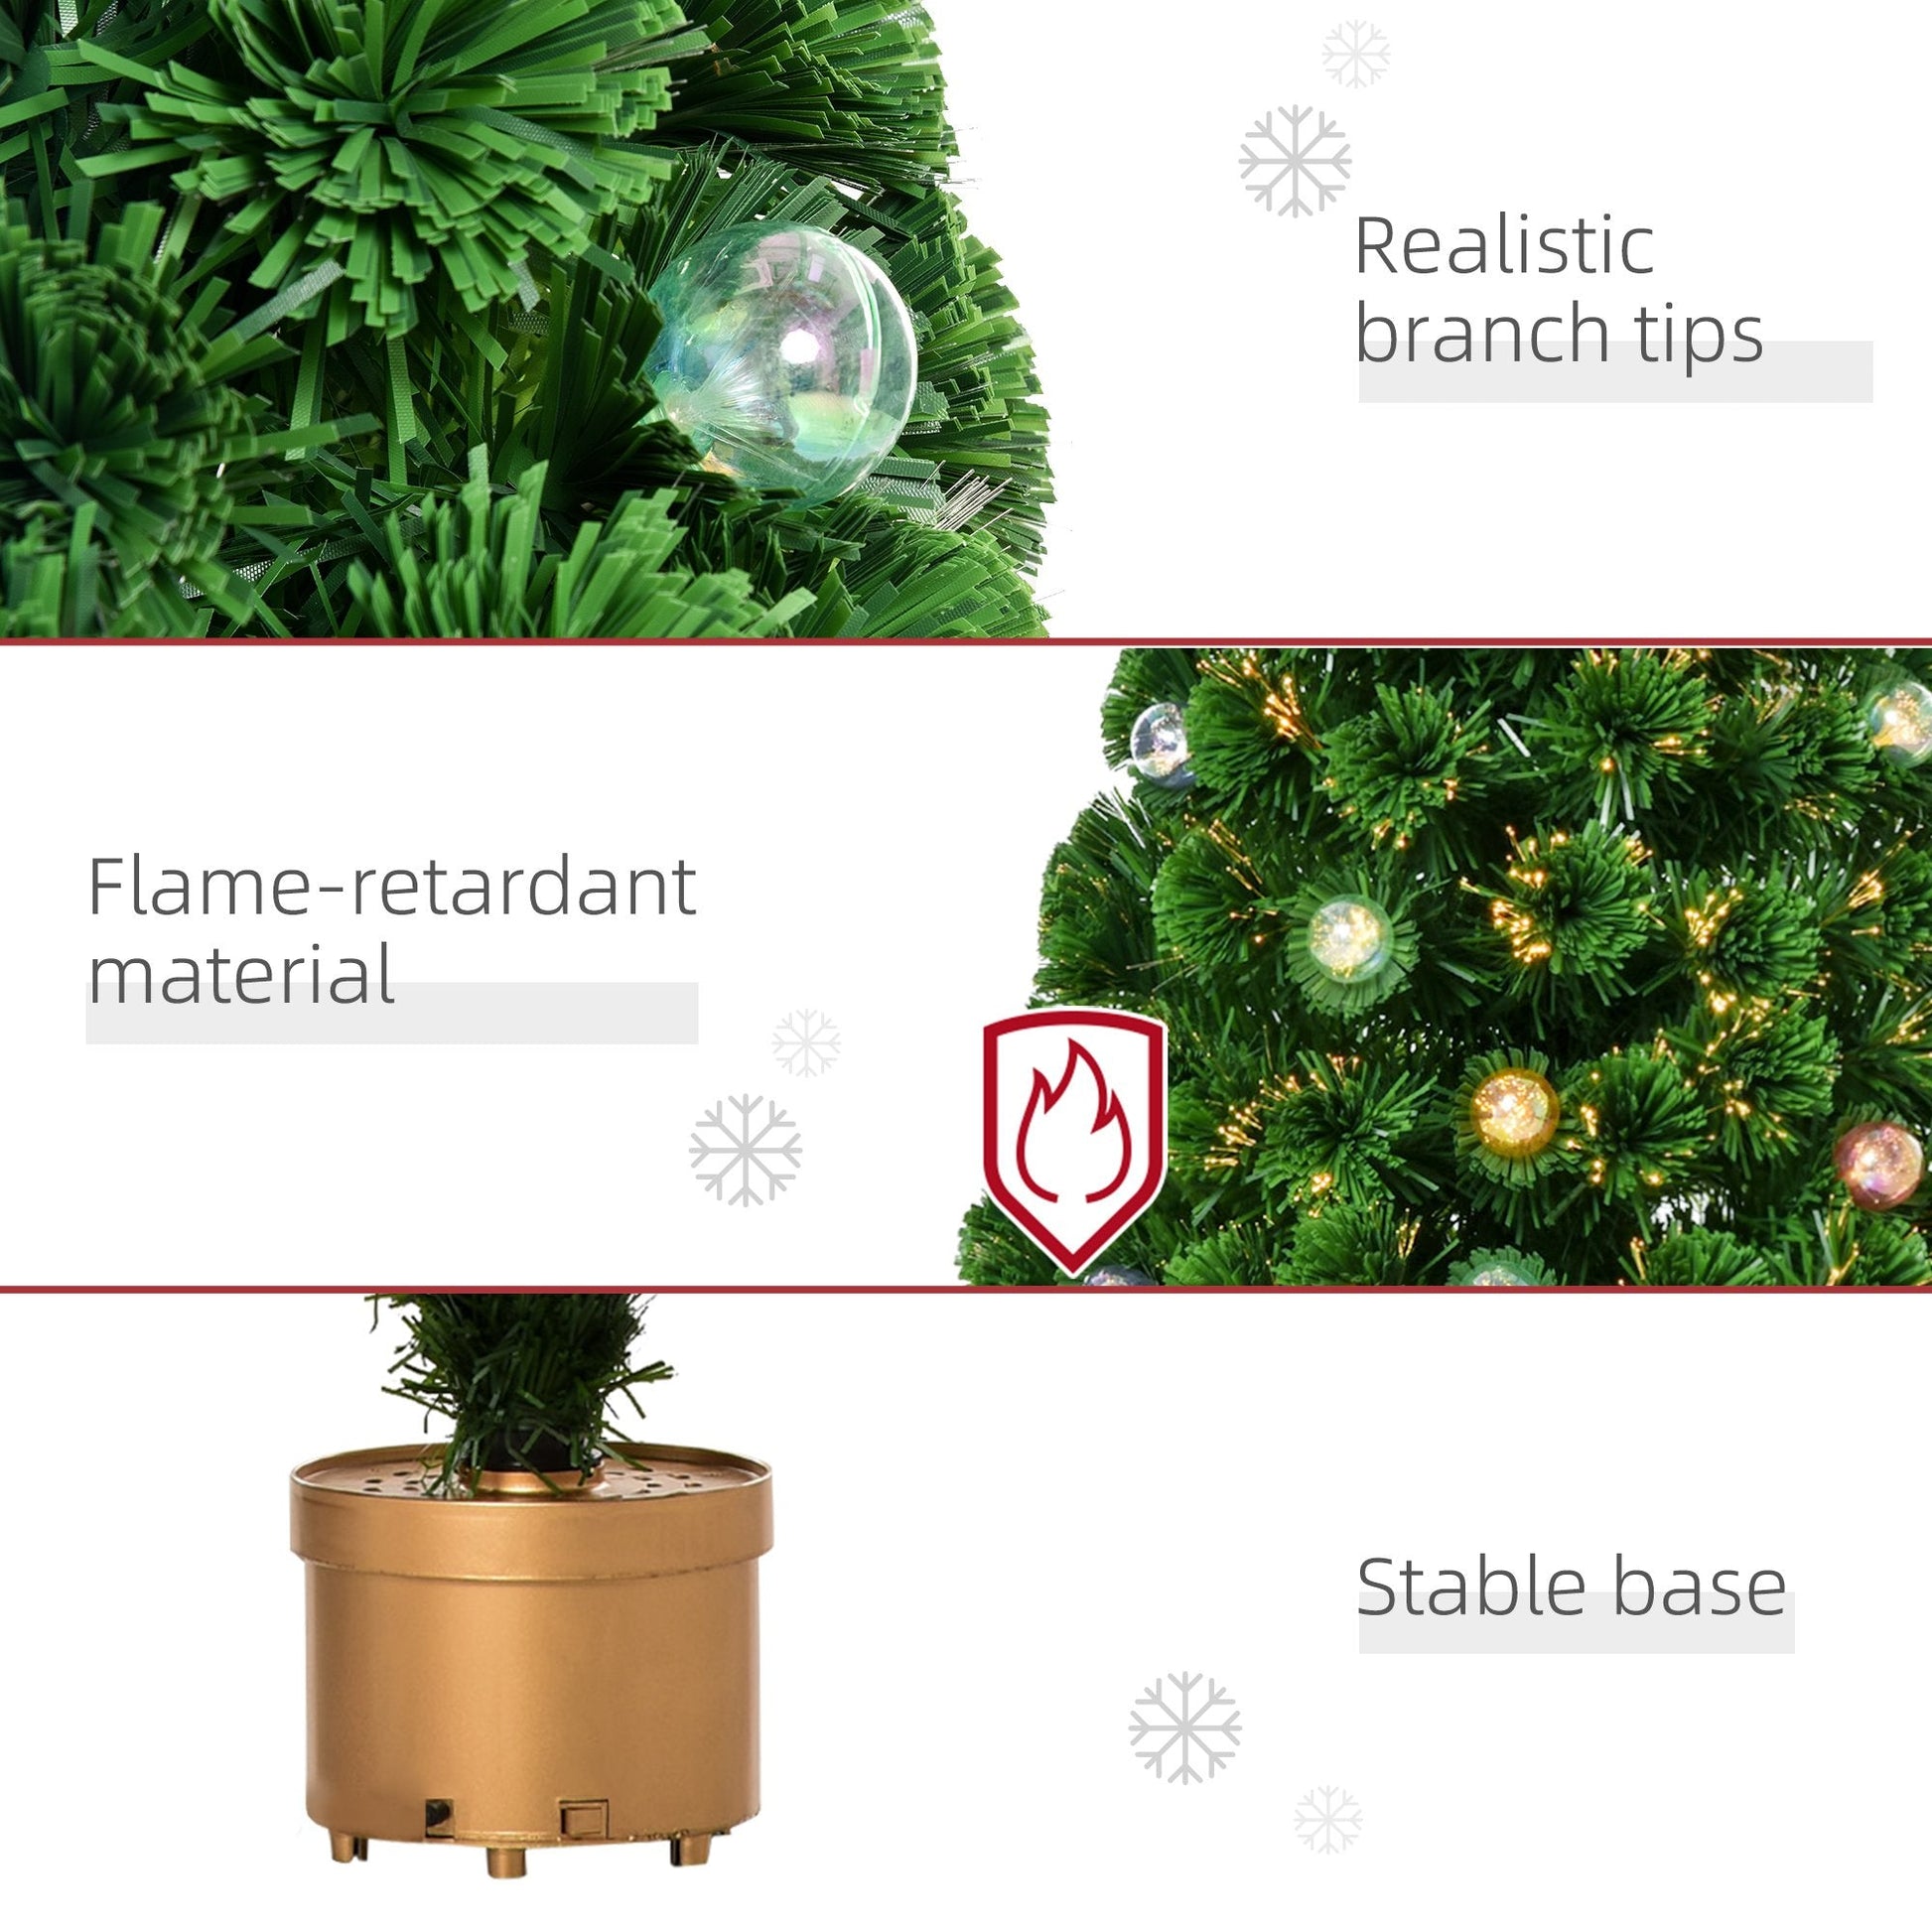 HOMCOM 4ft Pre-Lit Fibre Optic Artificial Christmas Tree with Golden Stand - maplin.co.uk